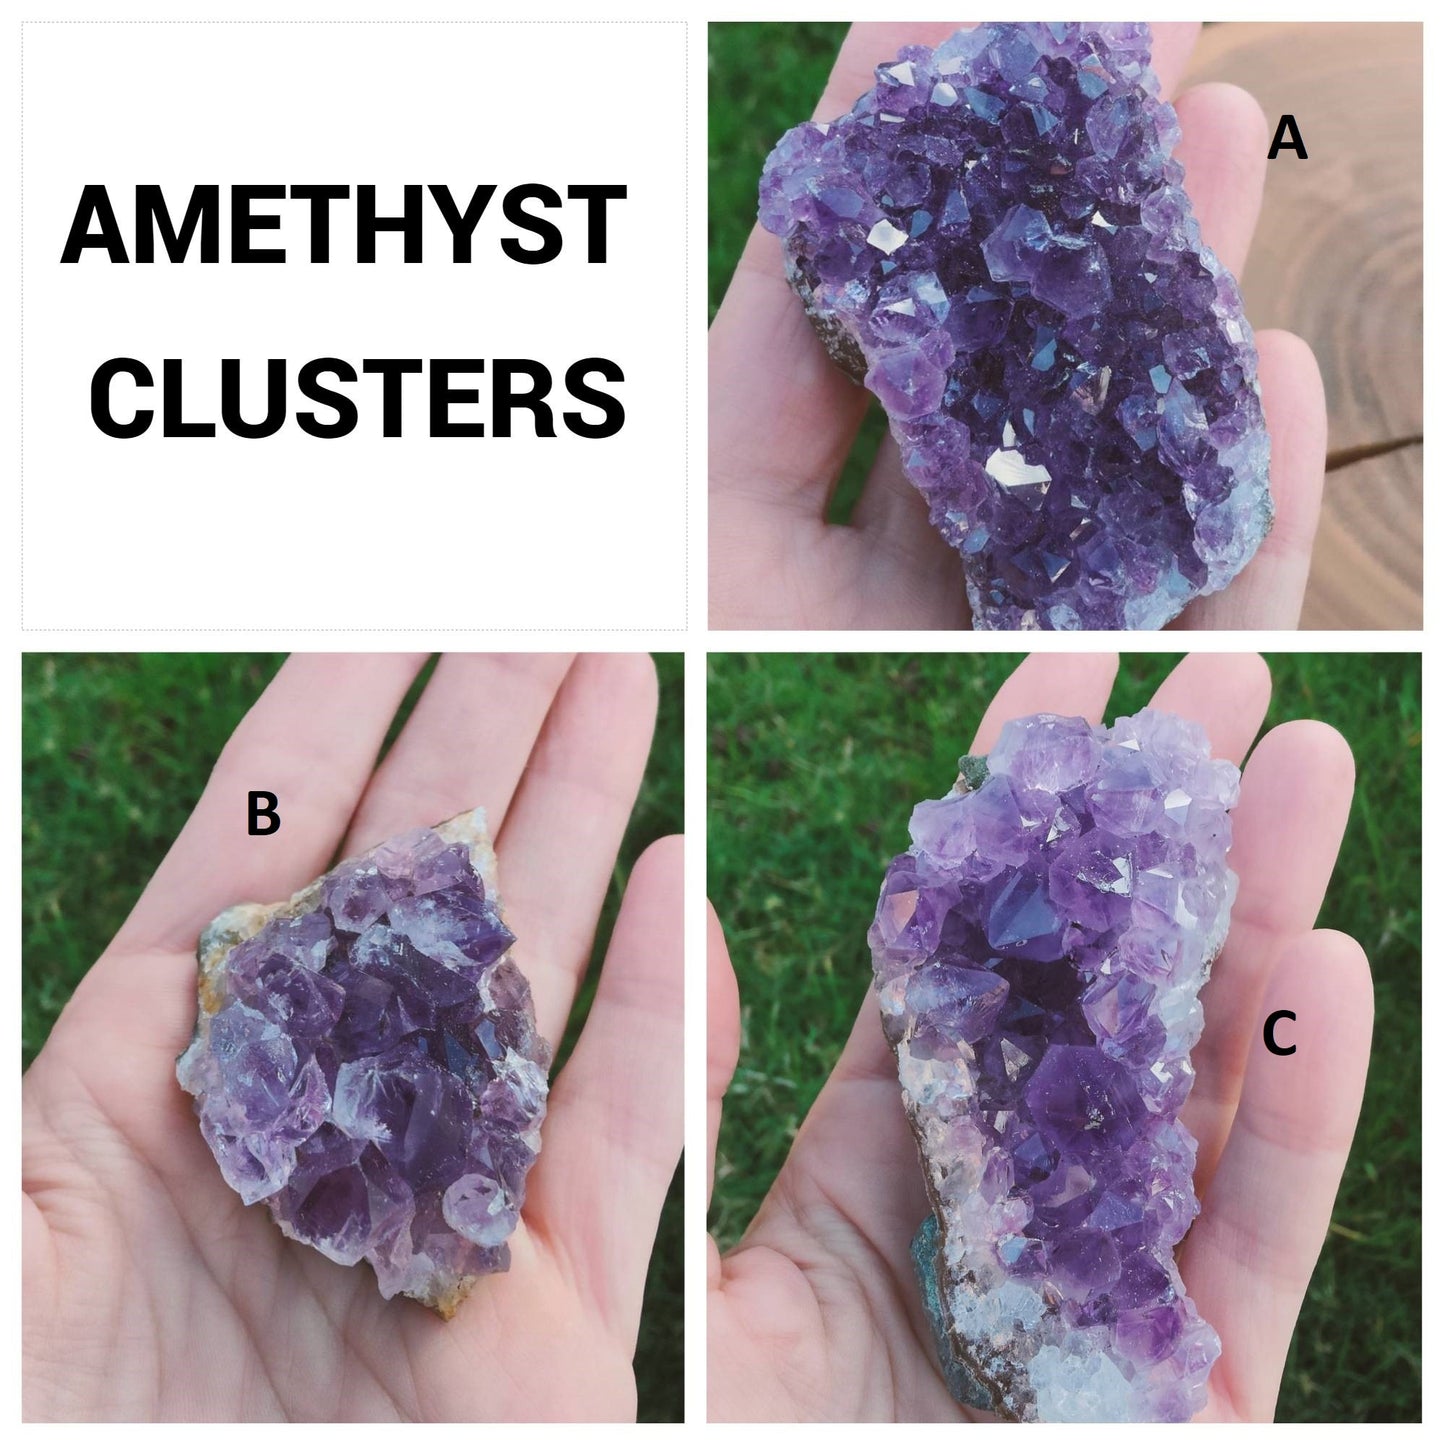 High grade Amethyst clusters